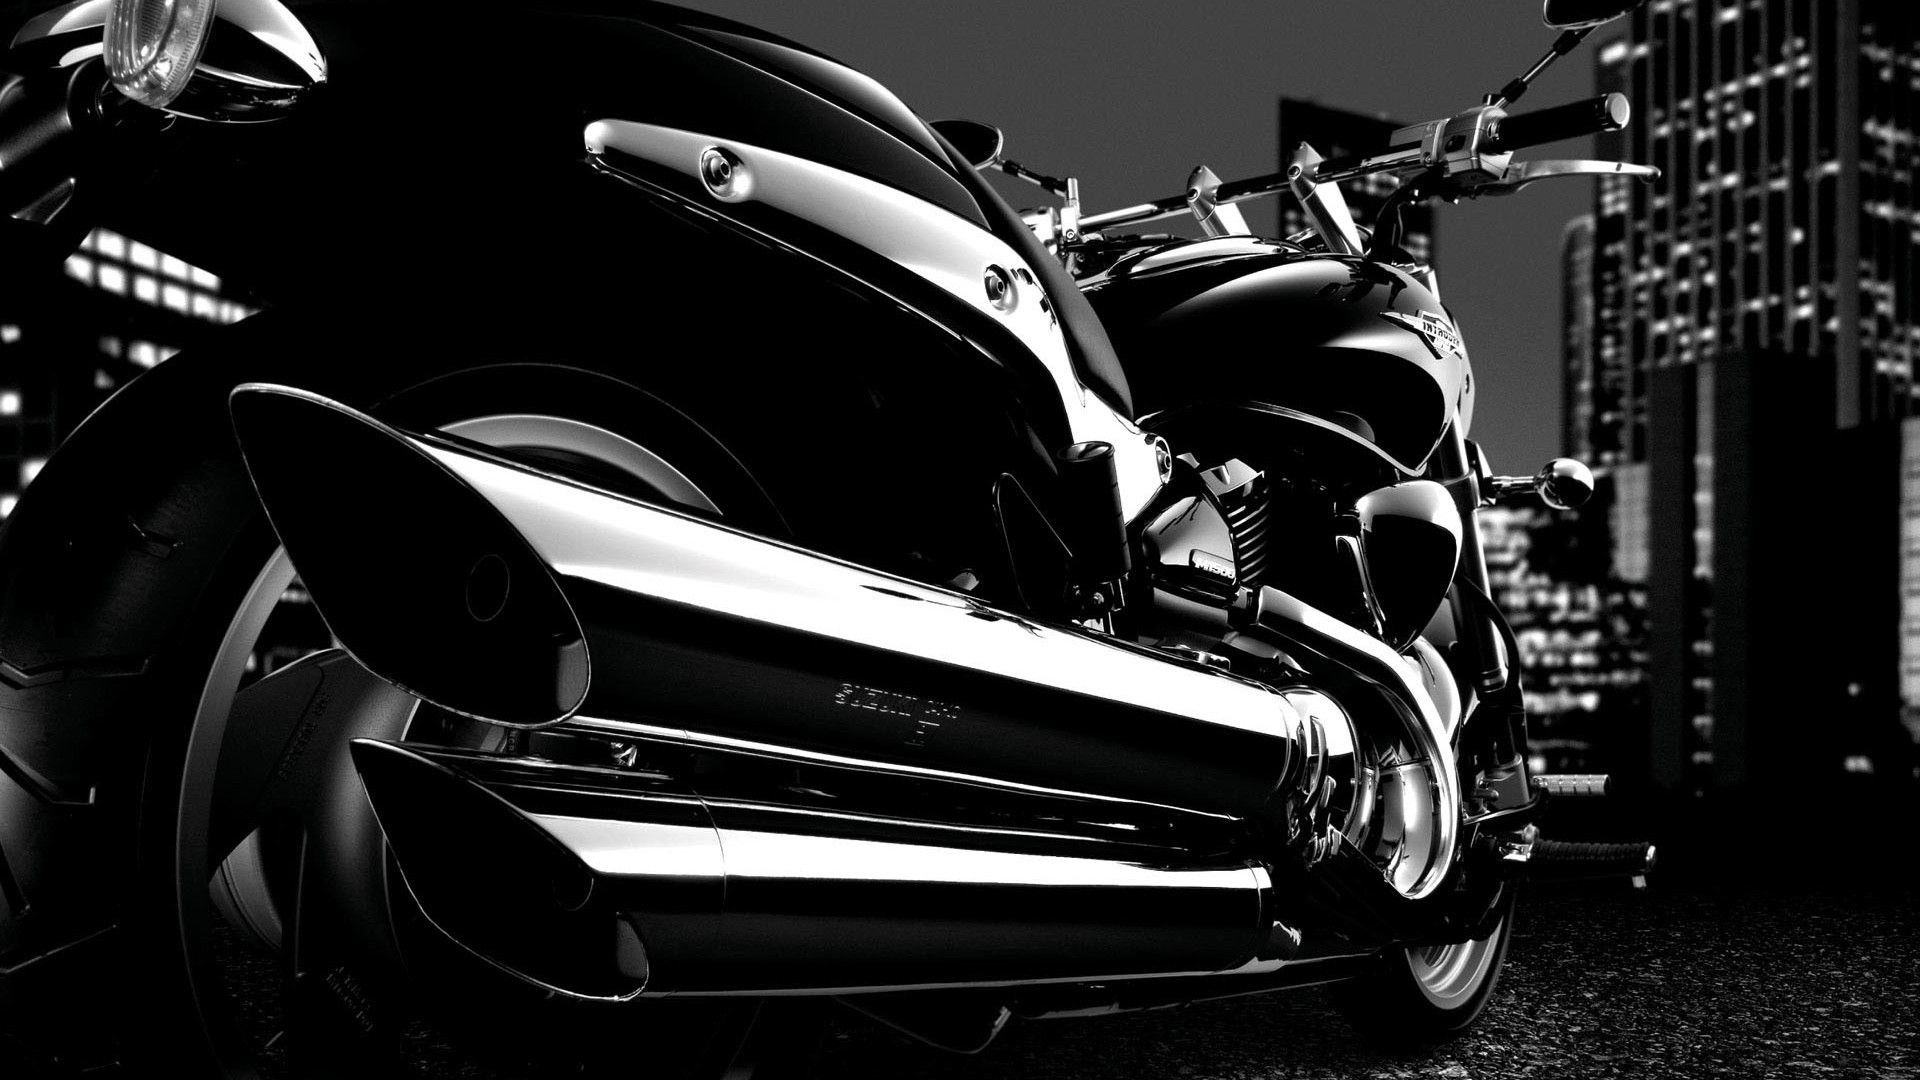 Harley Davidson Wallpaper5 600x338 1920x1080